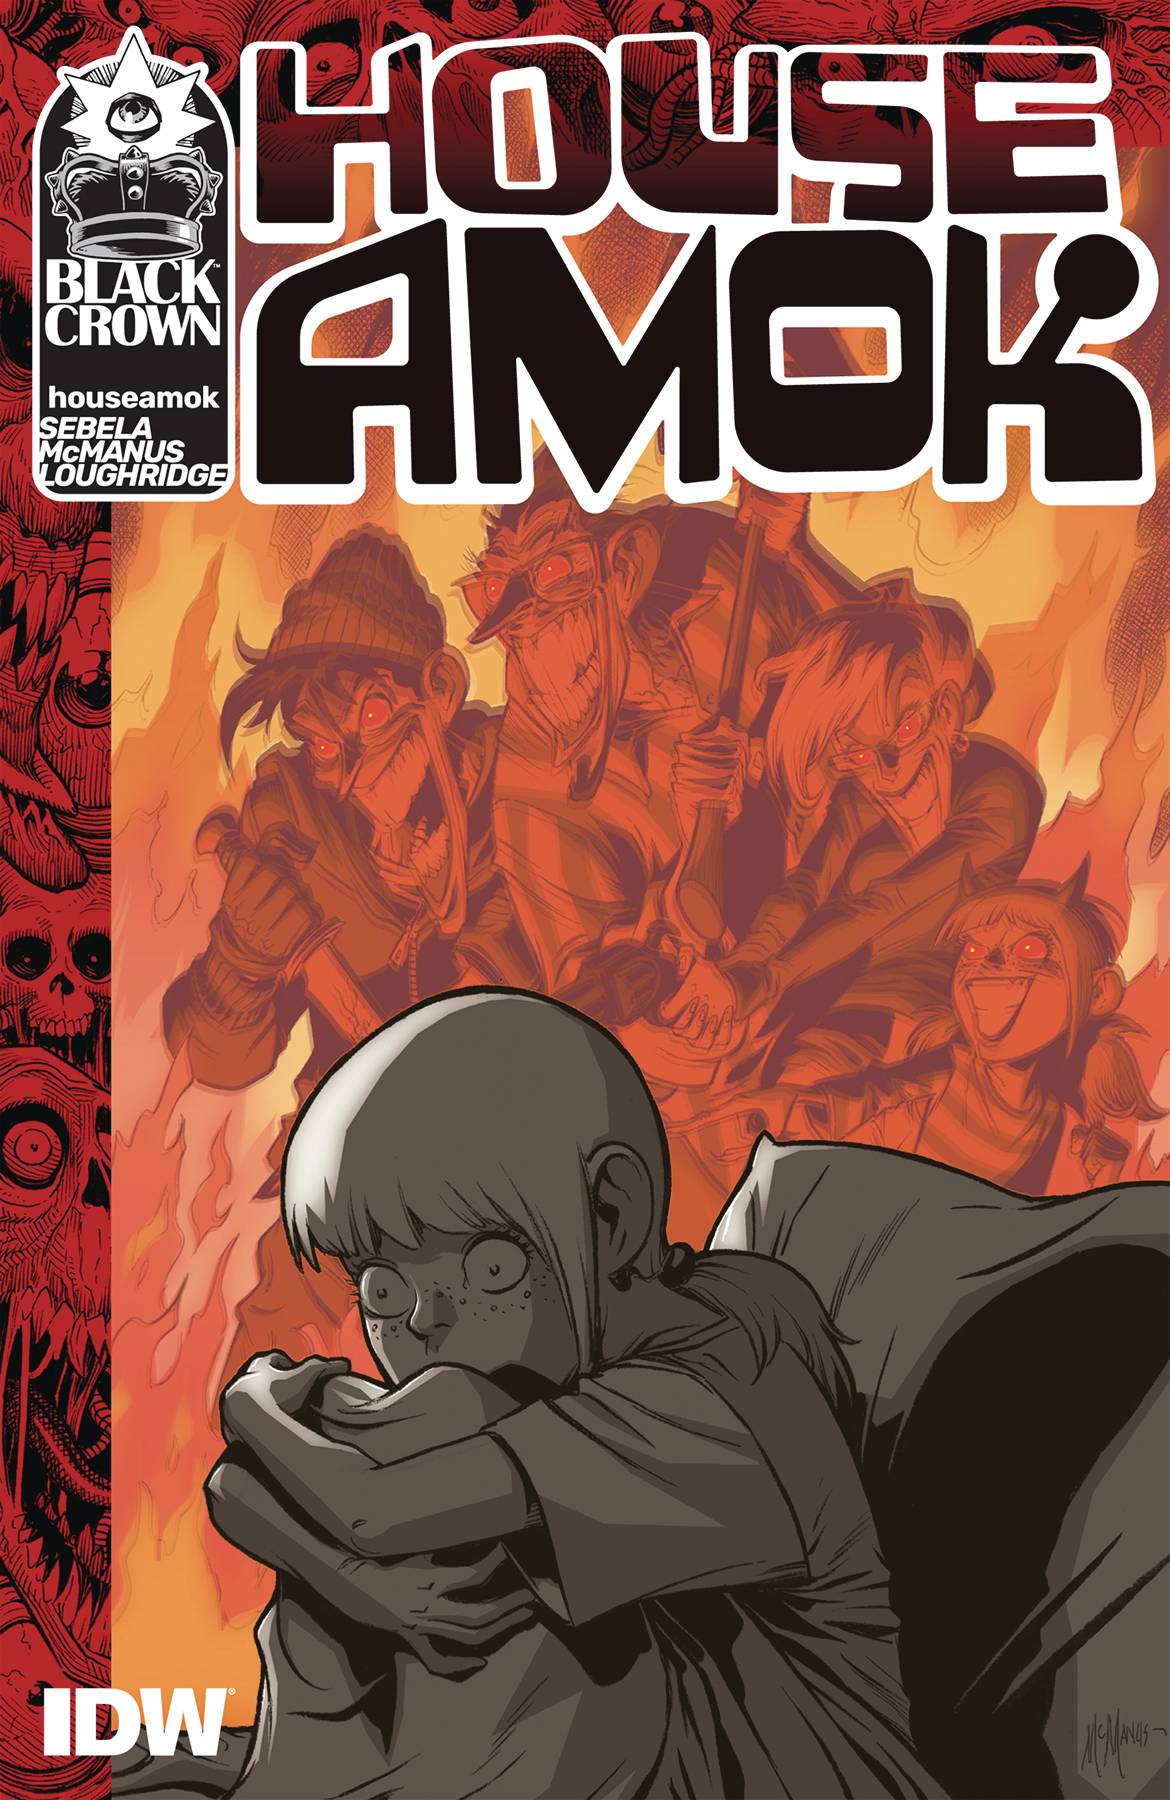 House Amok Graphic Novel Volume 1